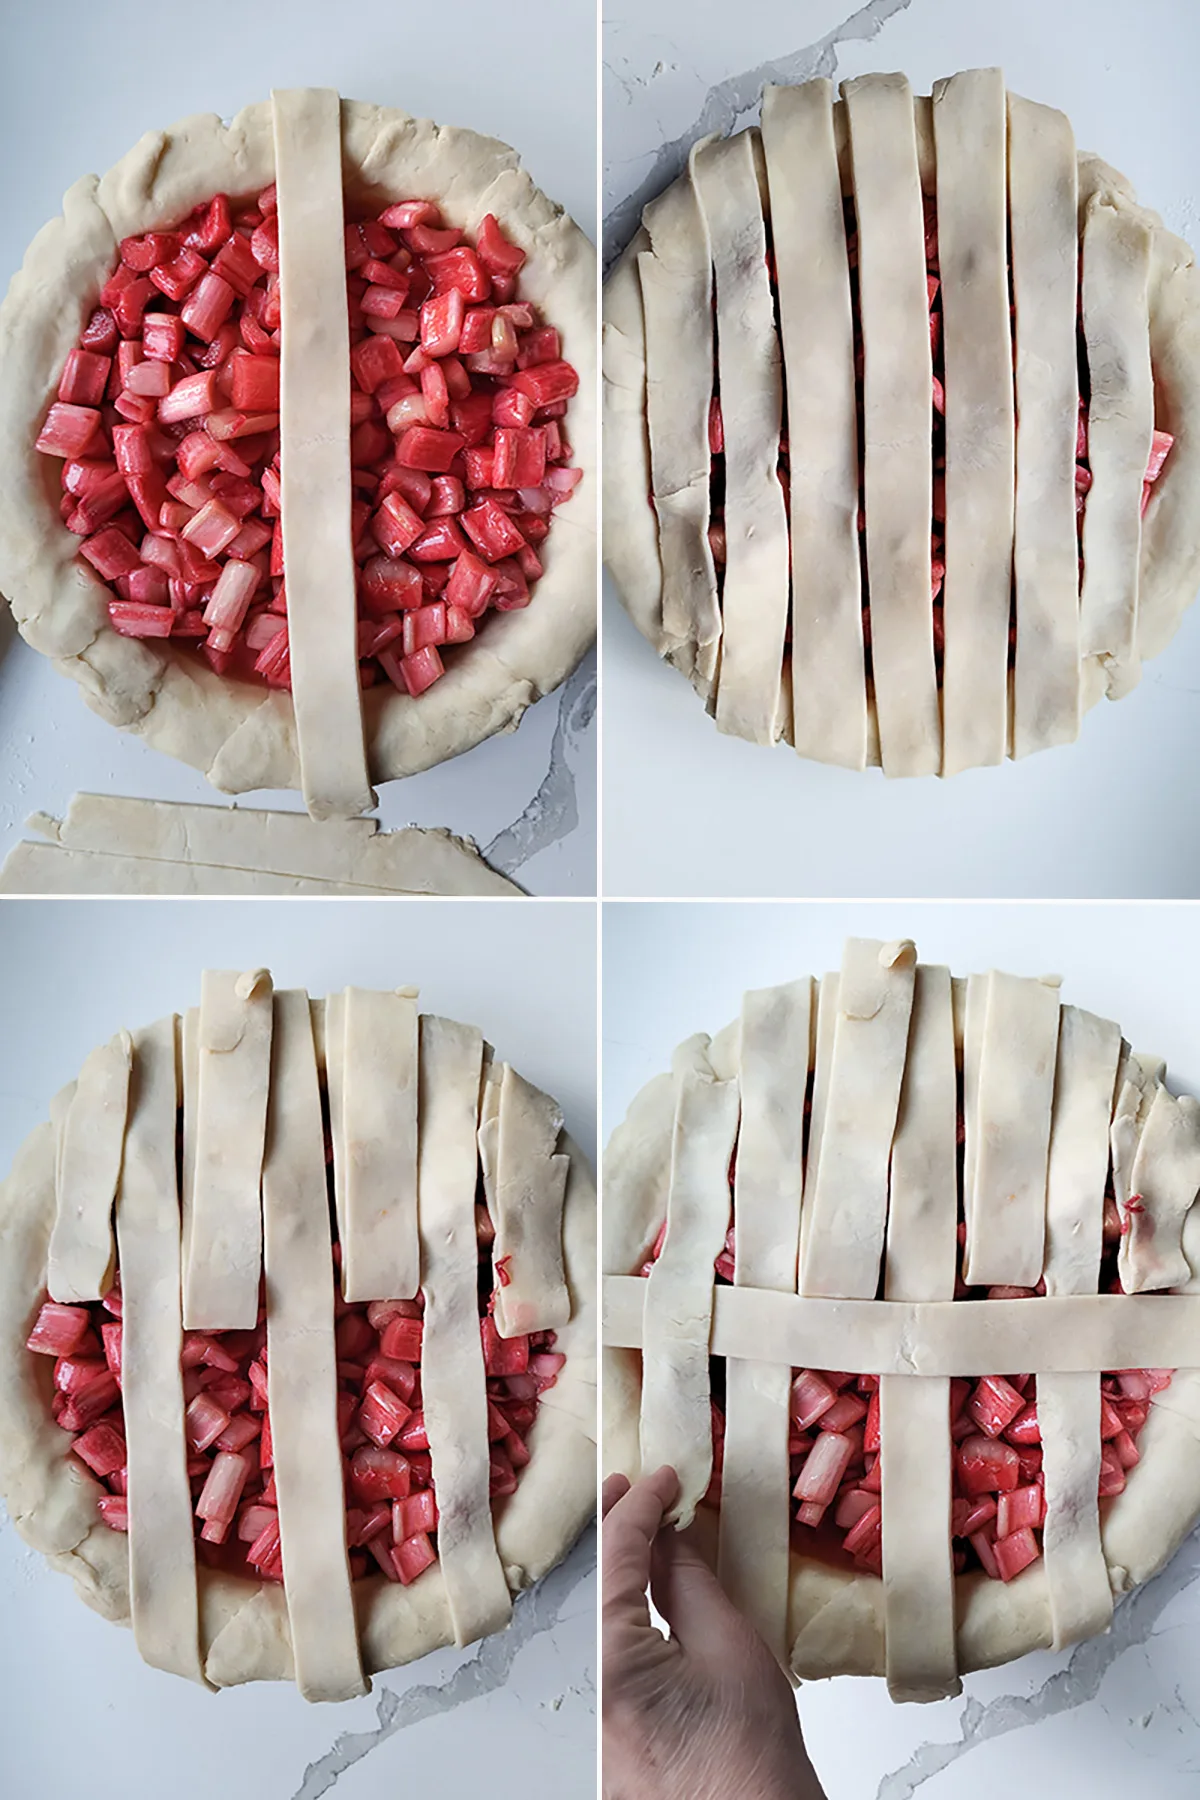 Weaving strips of pie dough over a rhubarb pie.